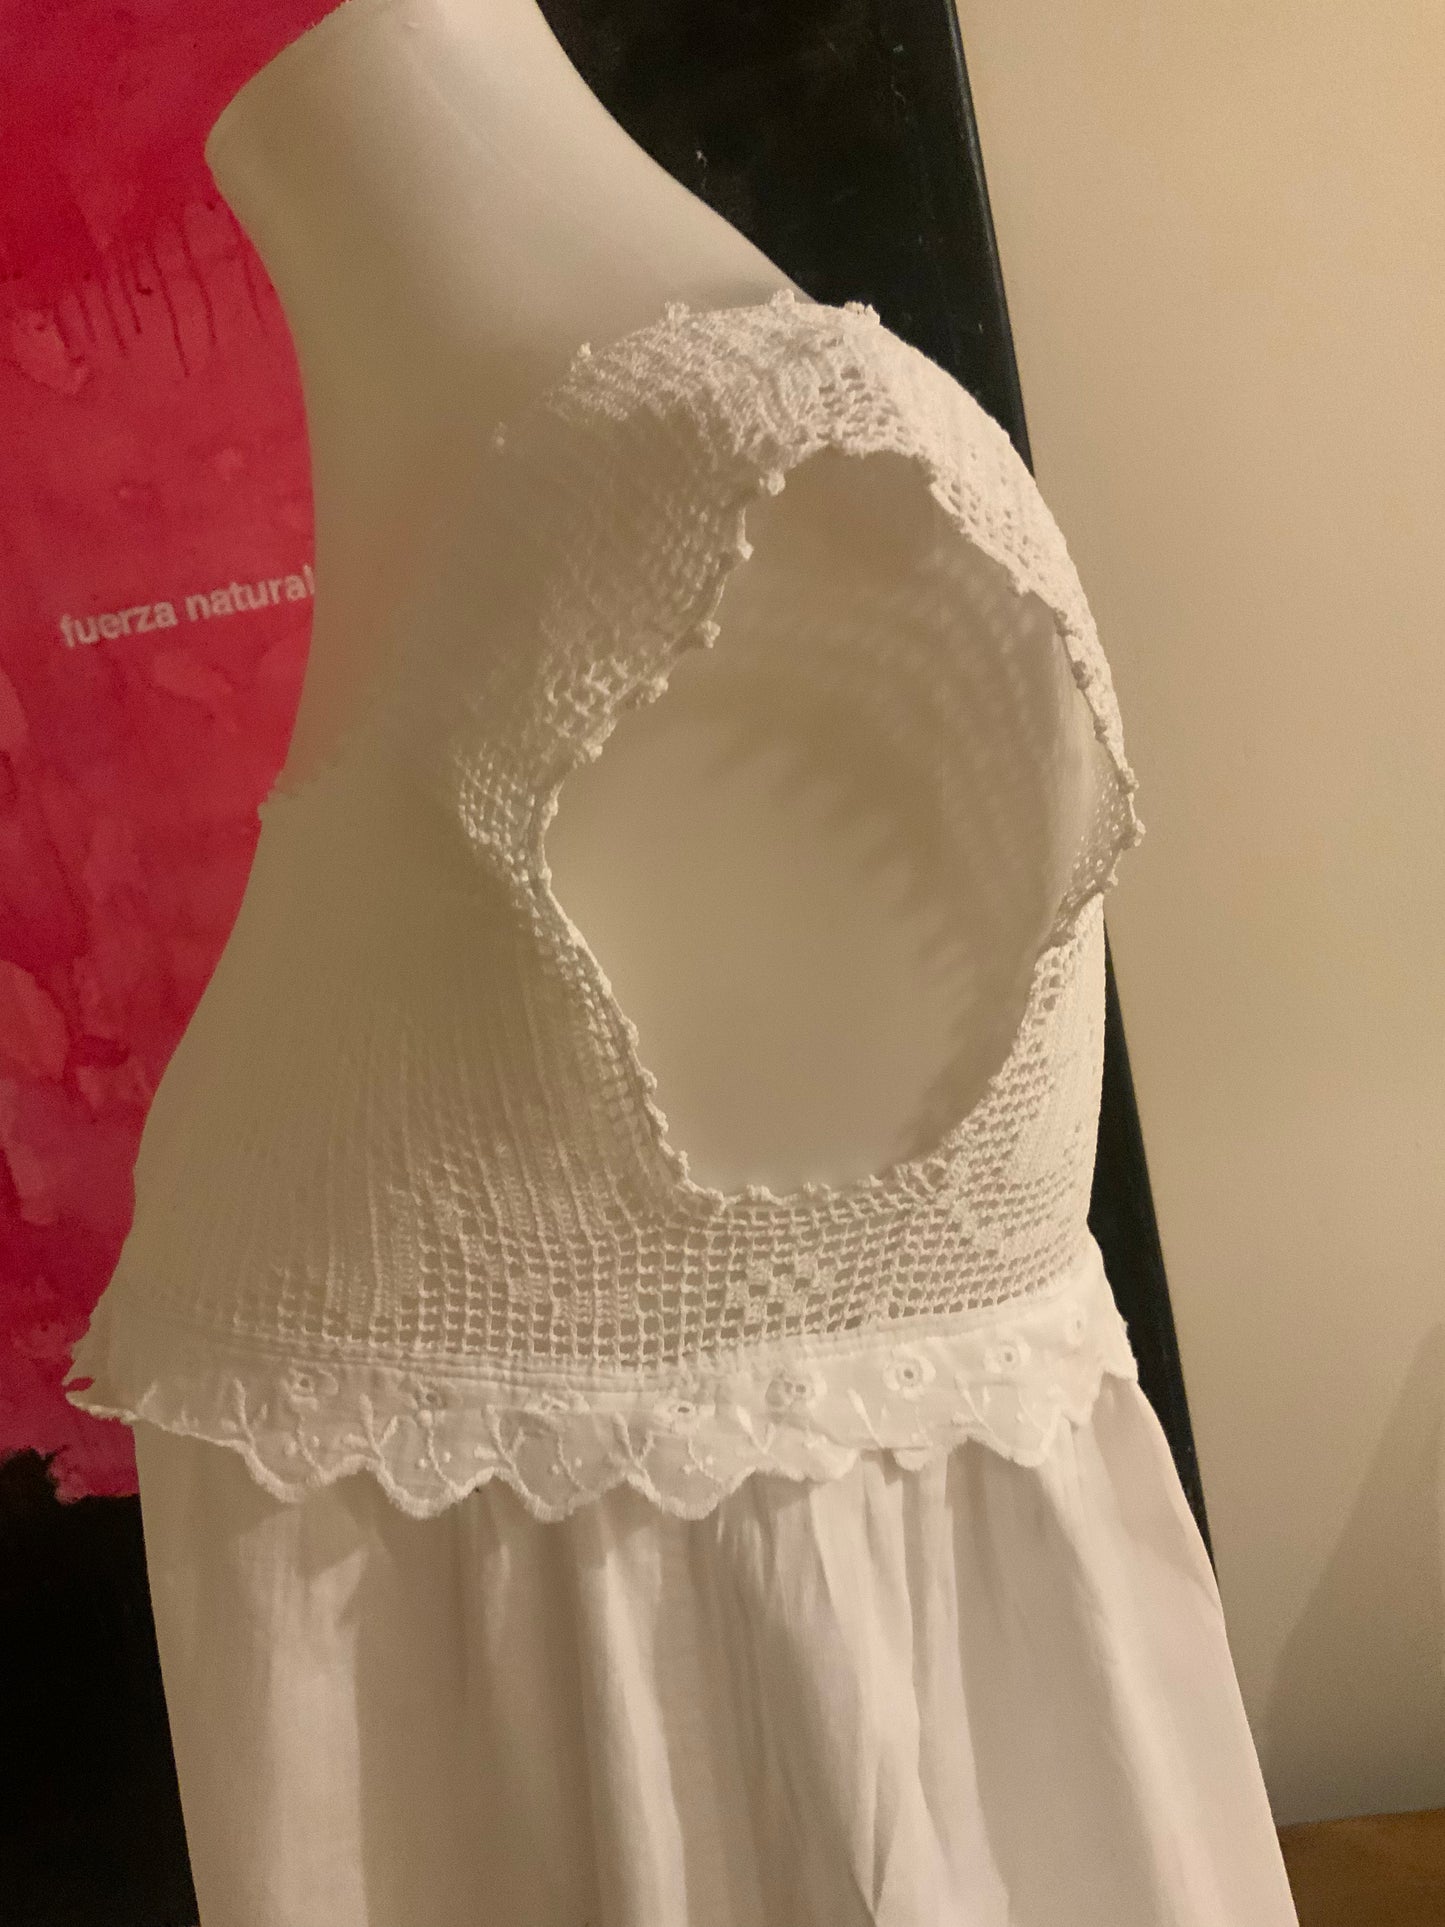 Victoria Cotton Nightgown - Filet Lace - 1800